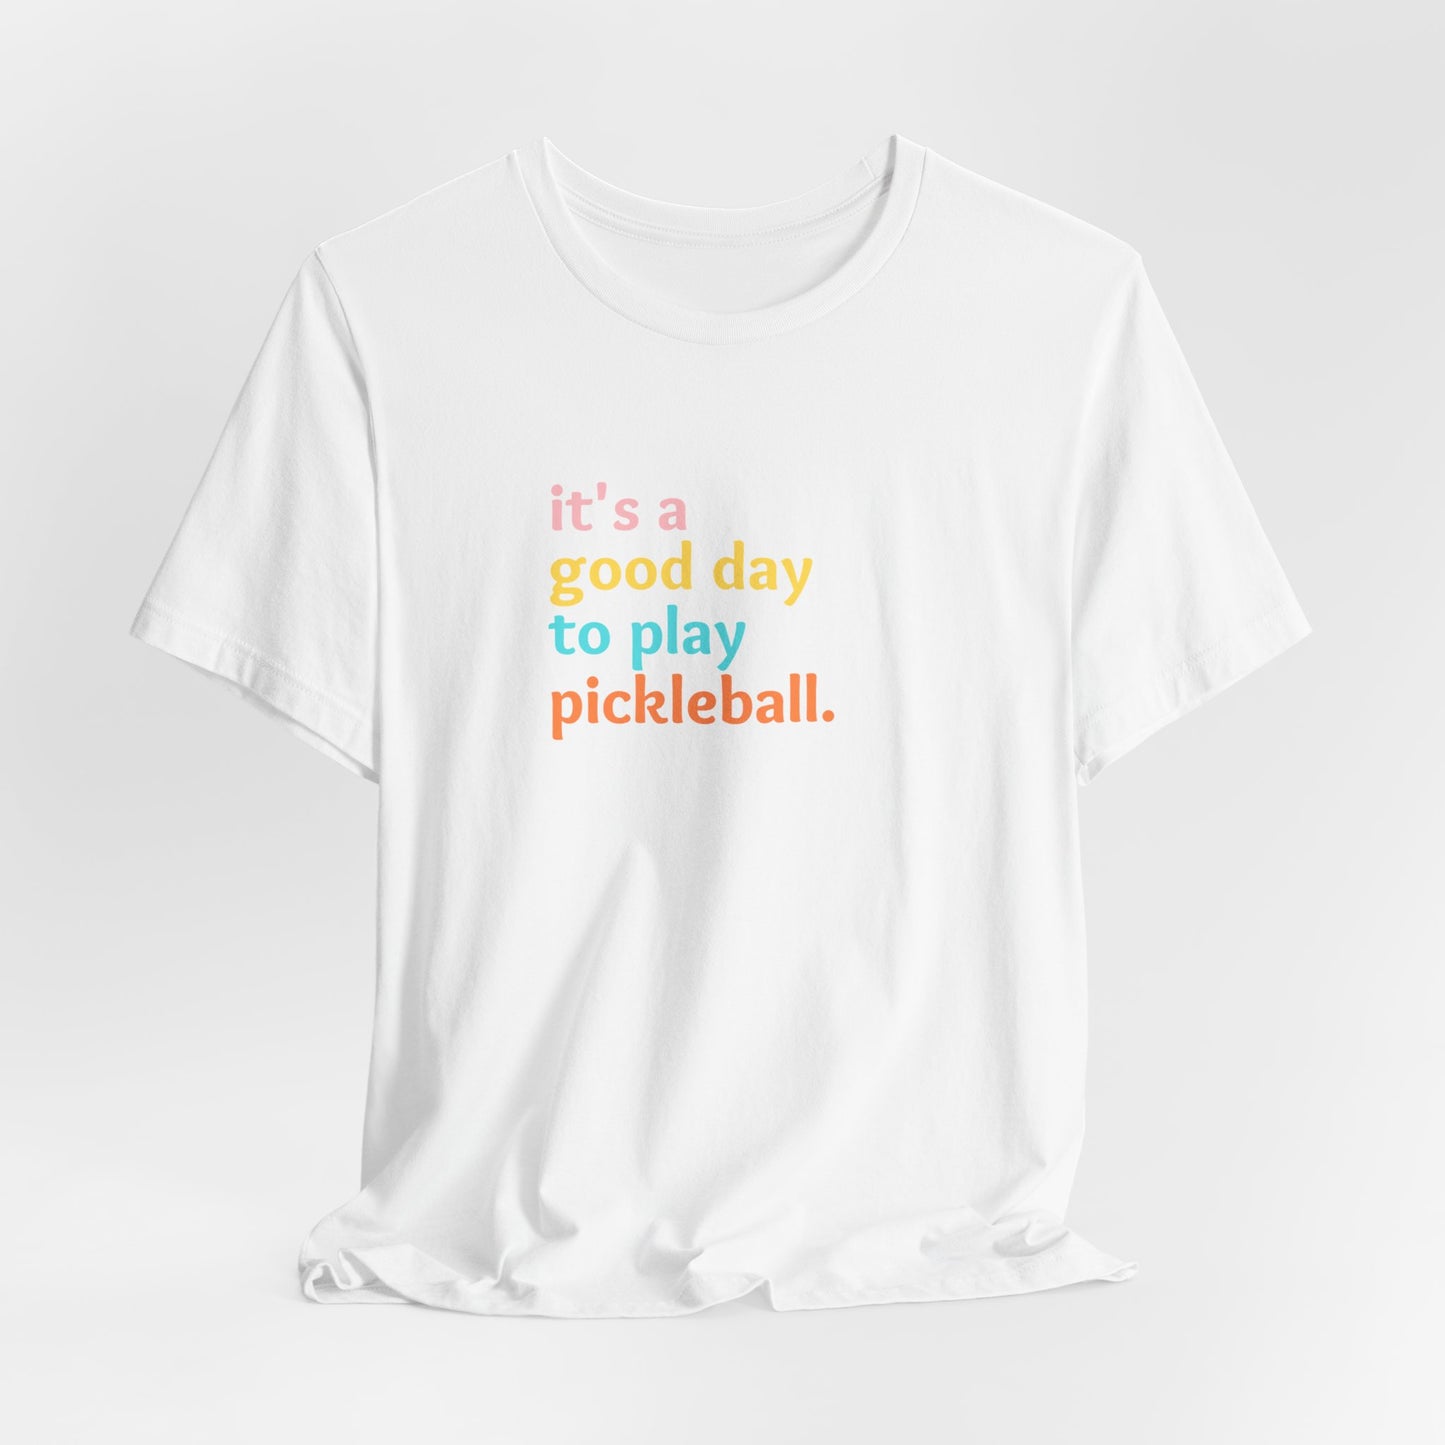 It's A Good Day To Play Pickleball Super Cute Unisex Premium T-Shirt